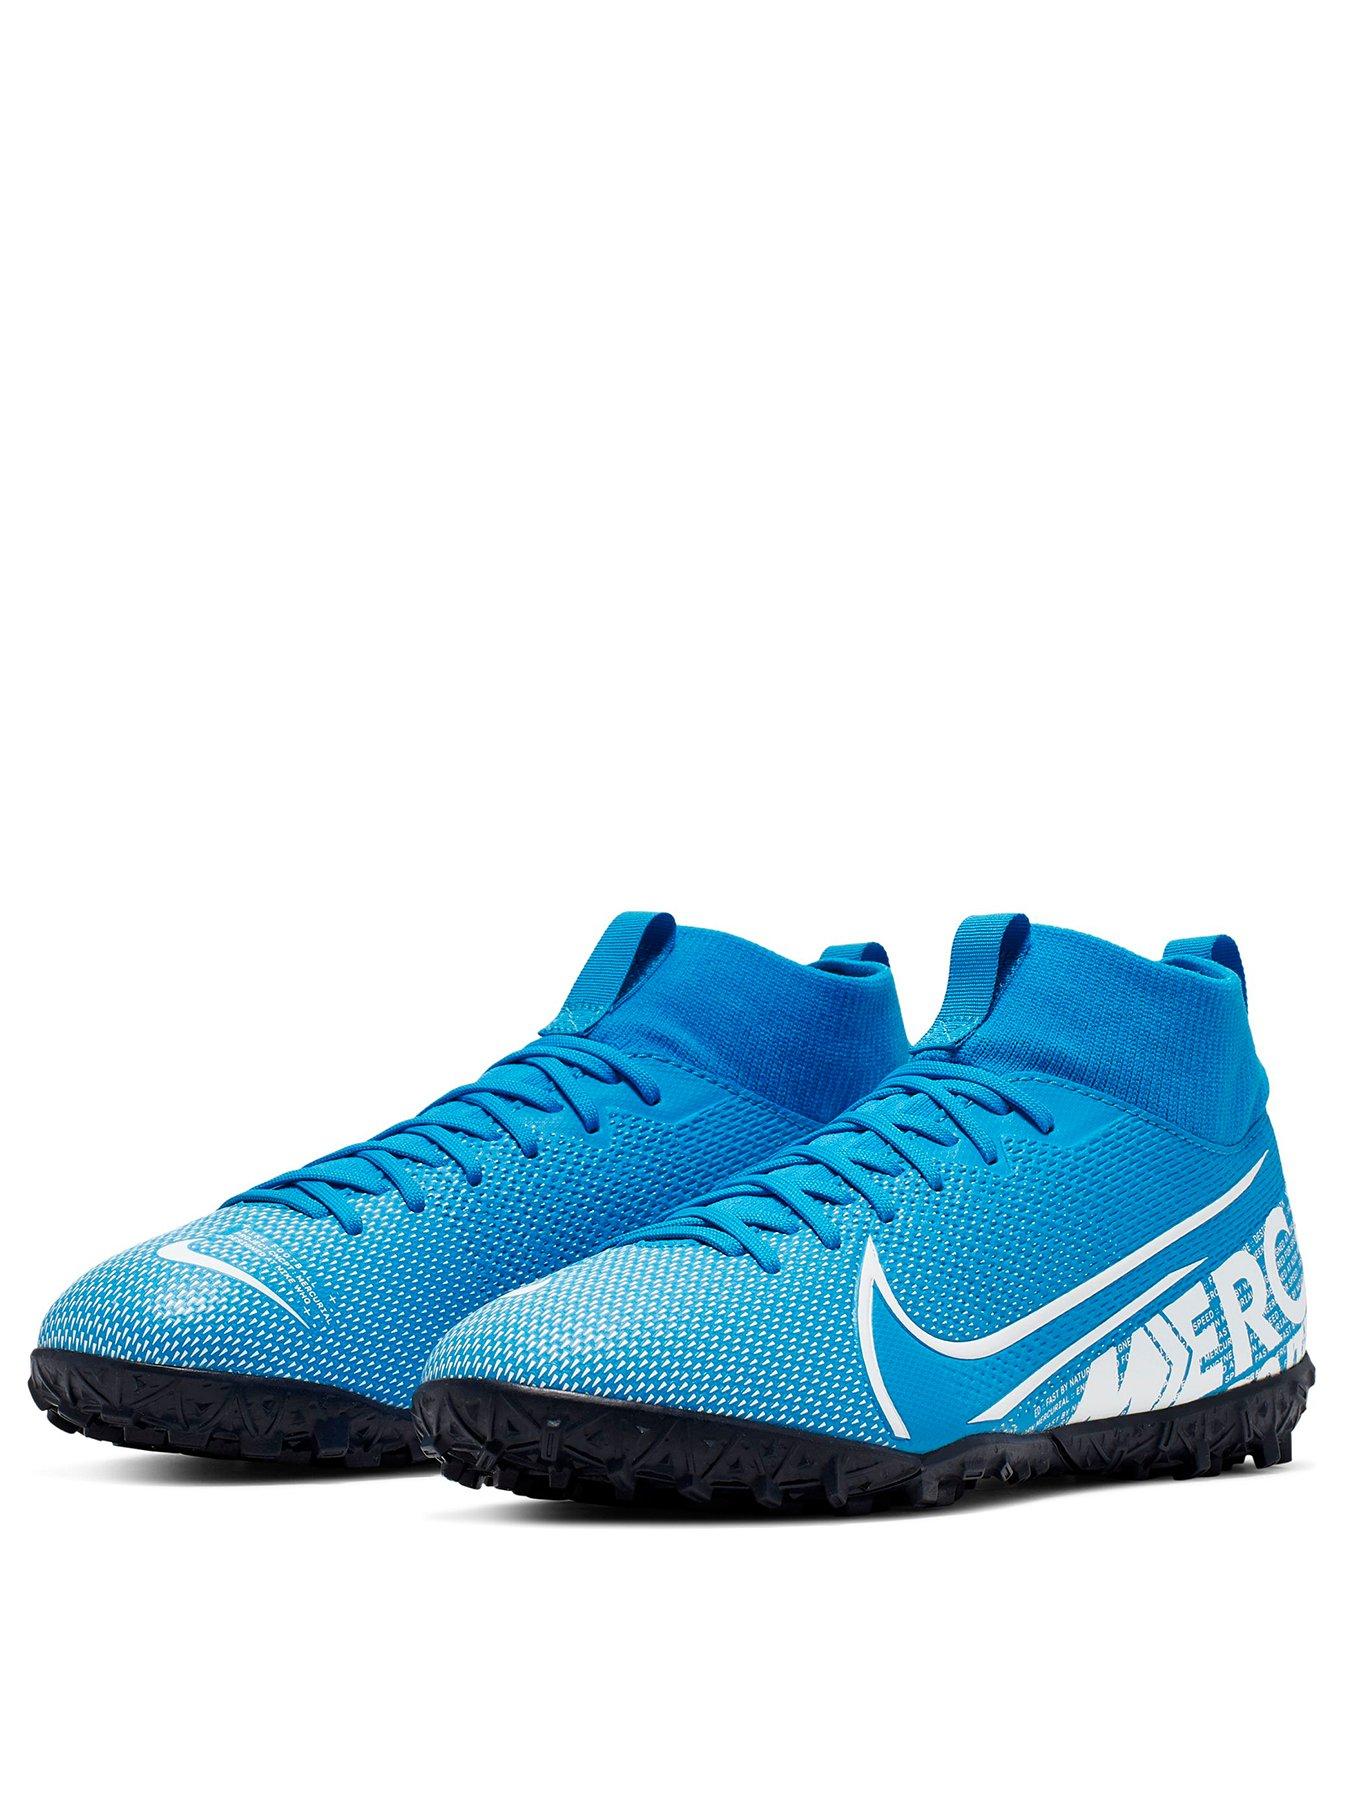 Football shoes Nike Mercurial Superfly 7 Academy FG MG M.